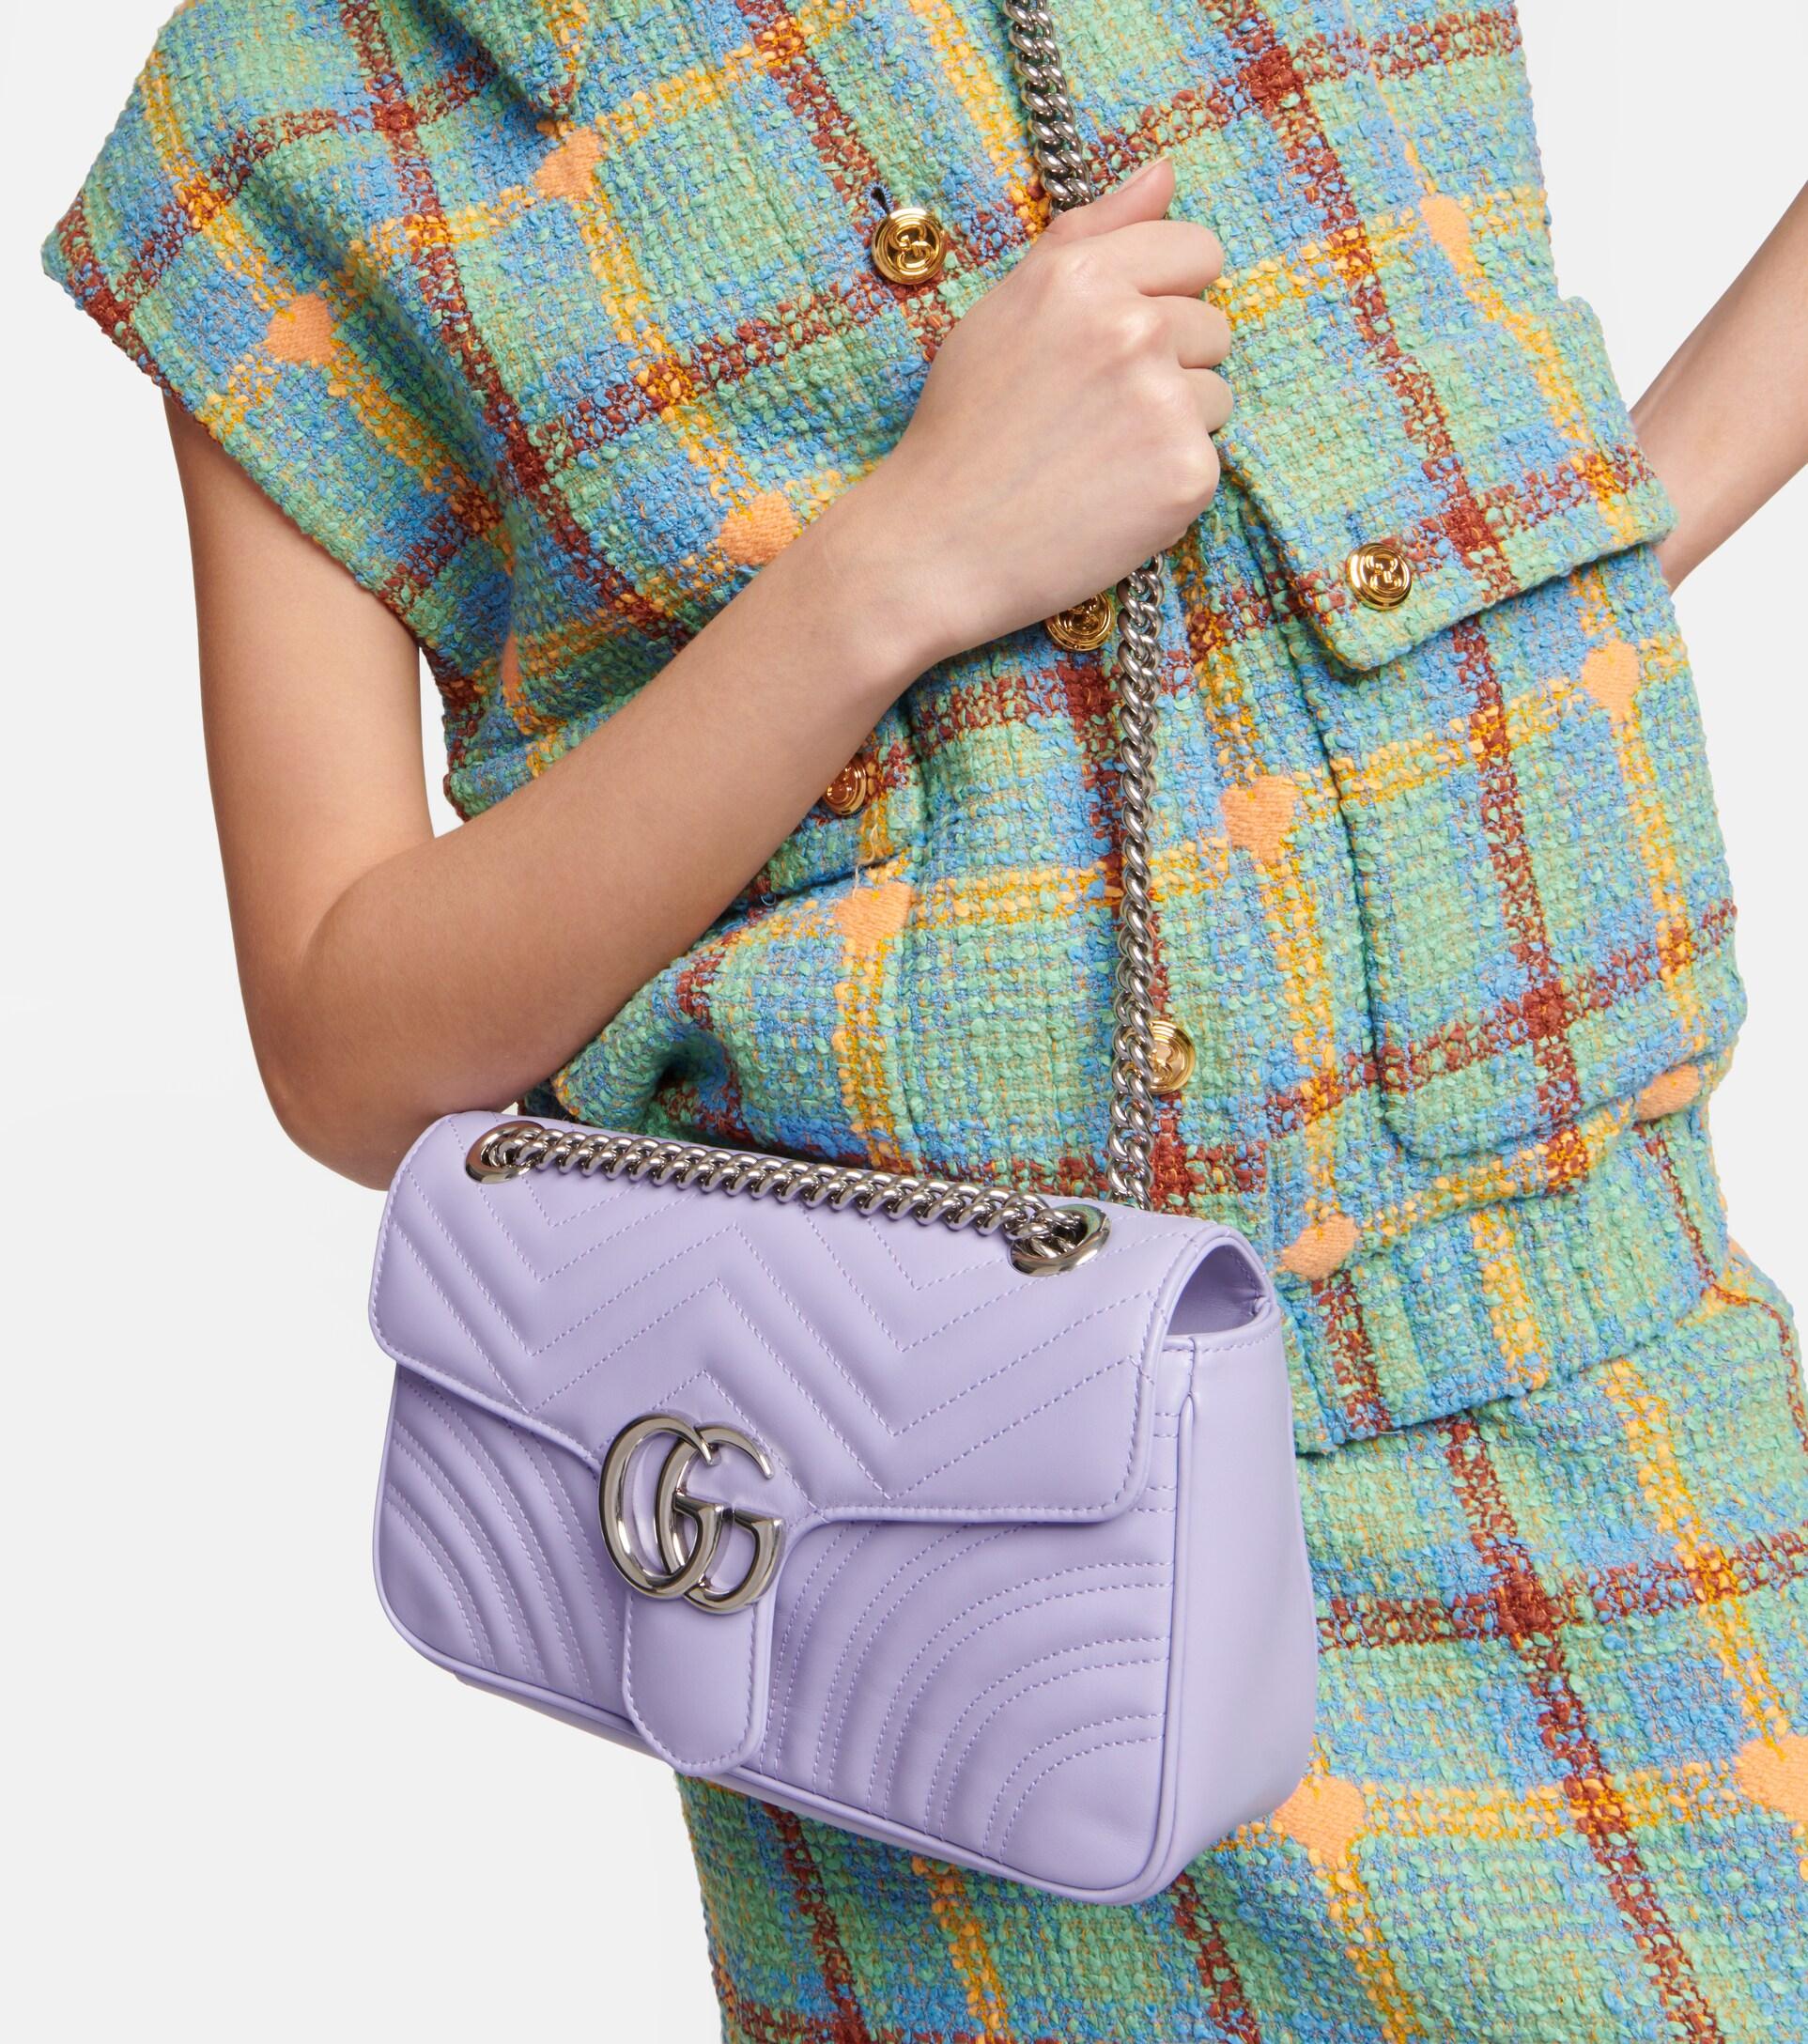 Gucci GG Marmont Small Shoulder Bag Purple